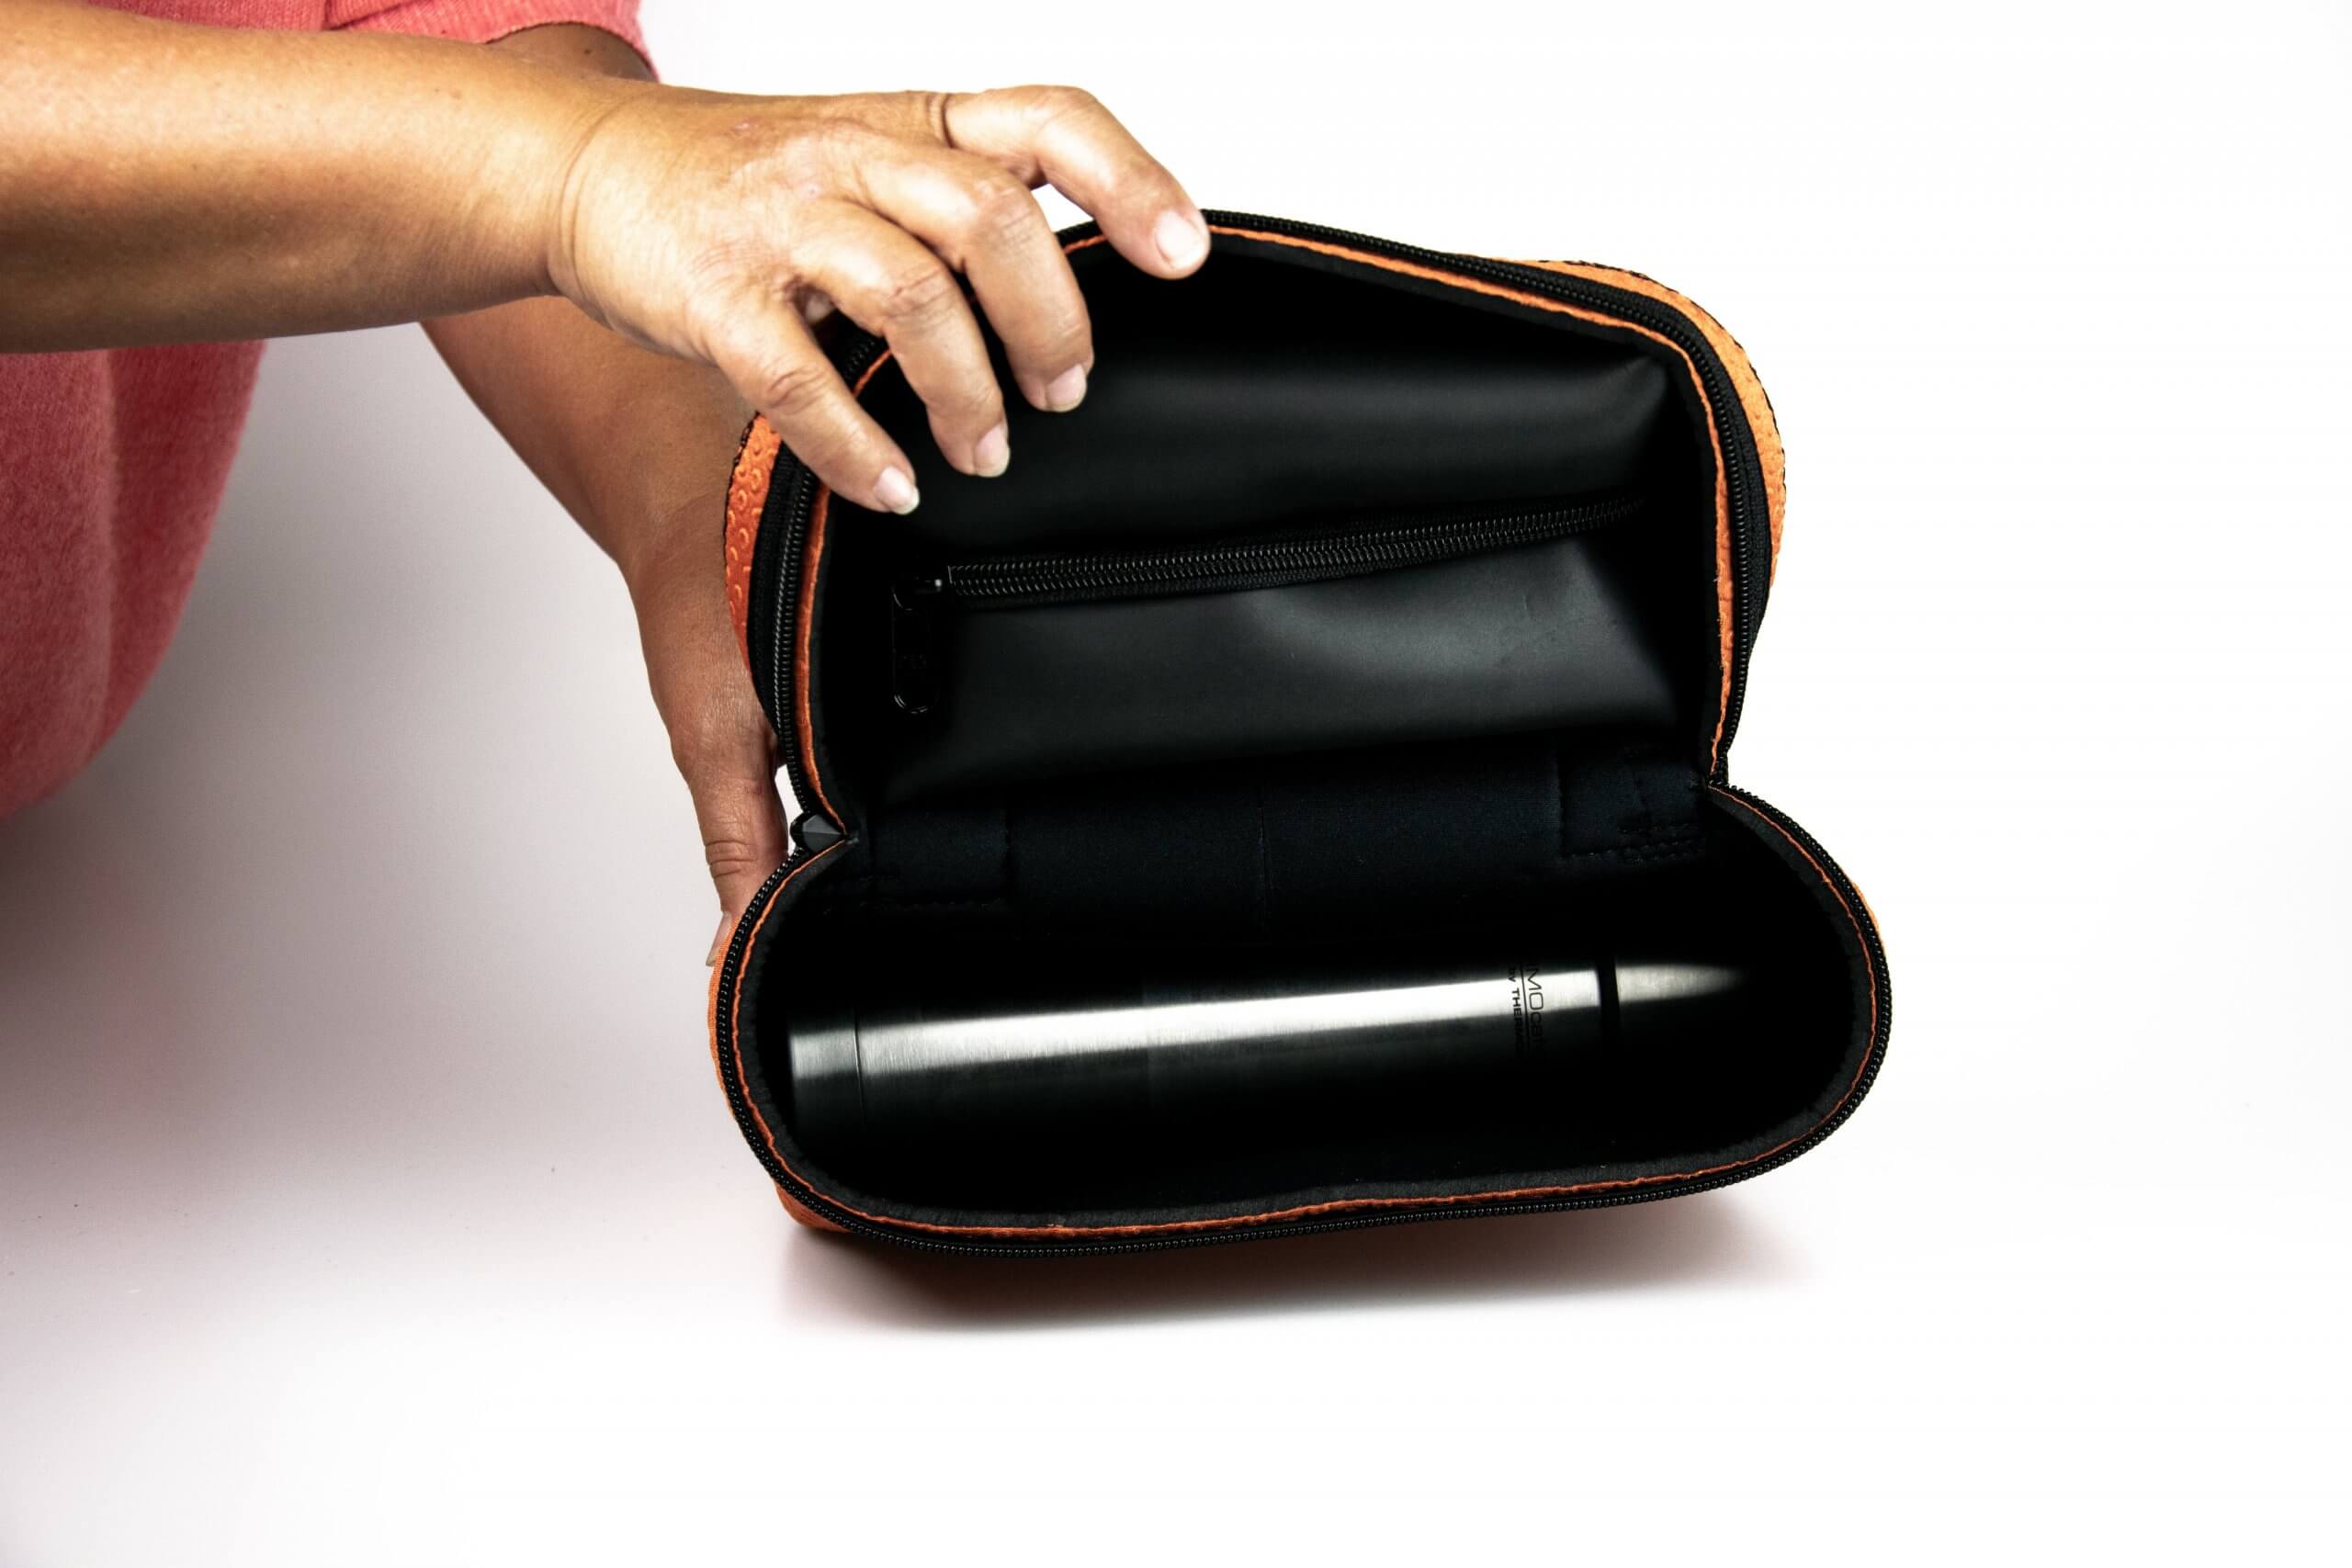 Hugo Orange Dot Bag shown open with smartphone tucked well inside